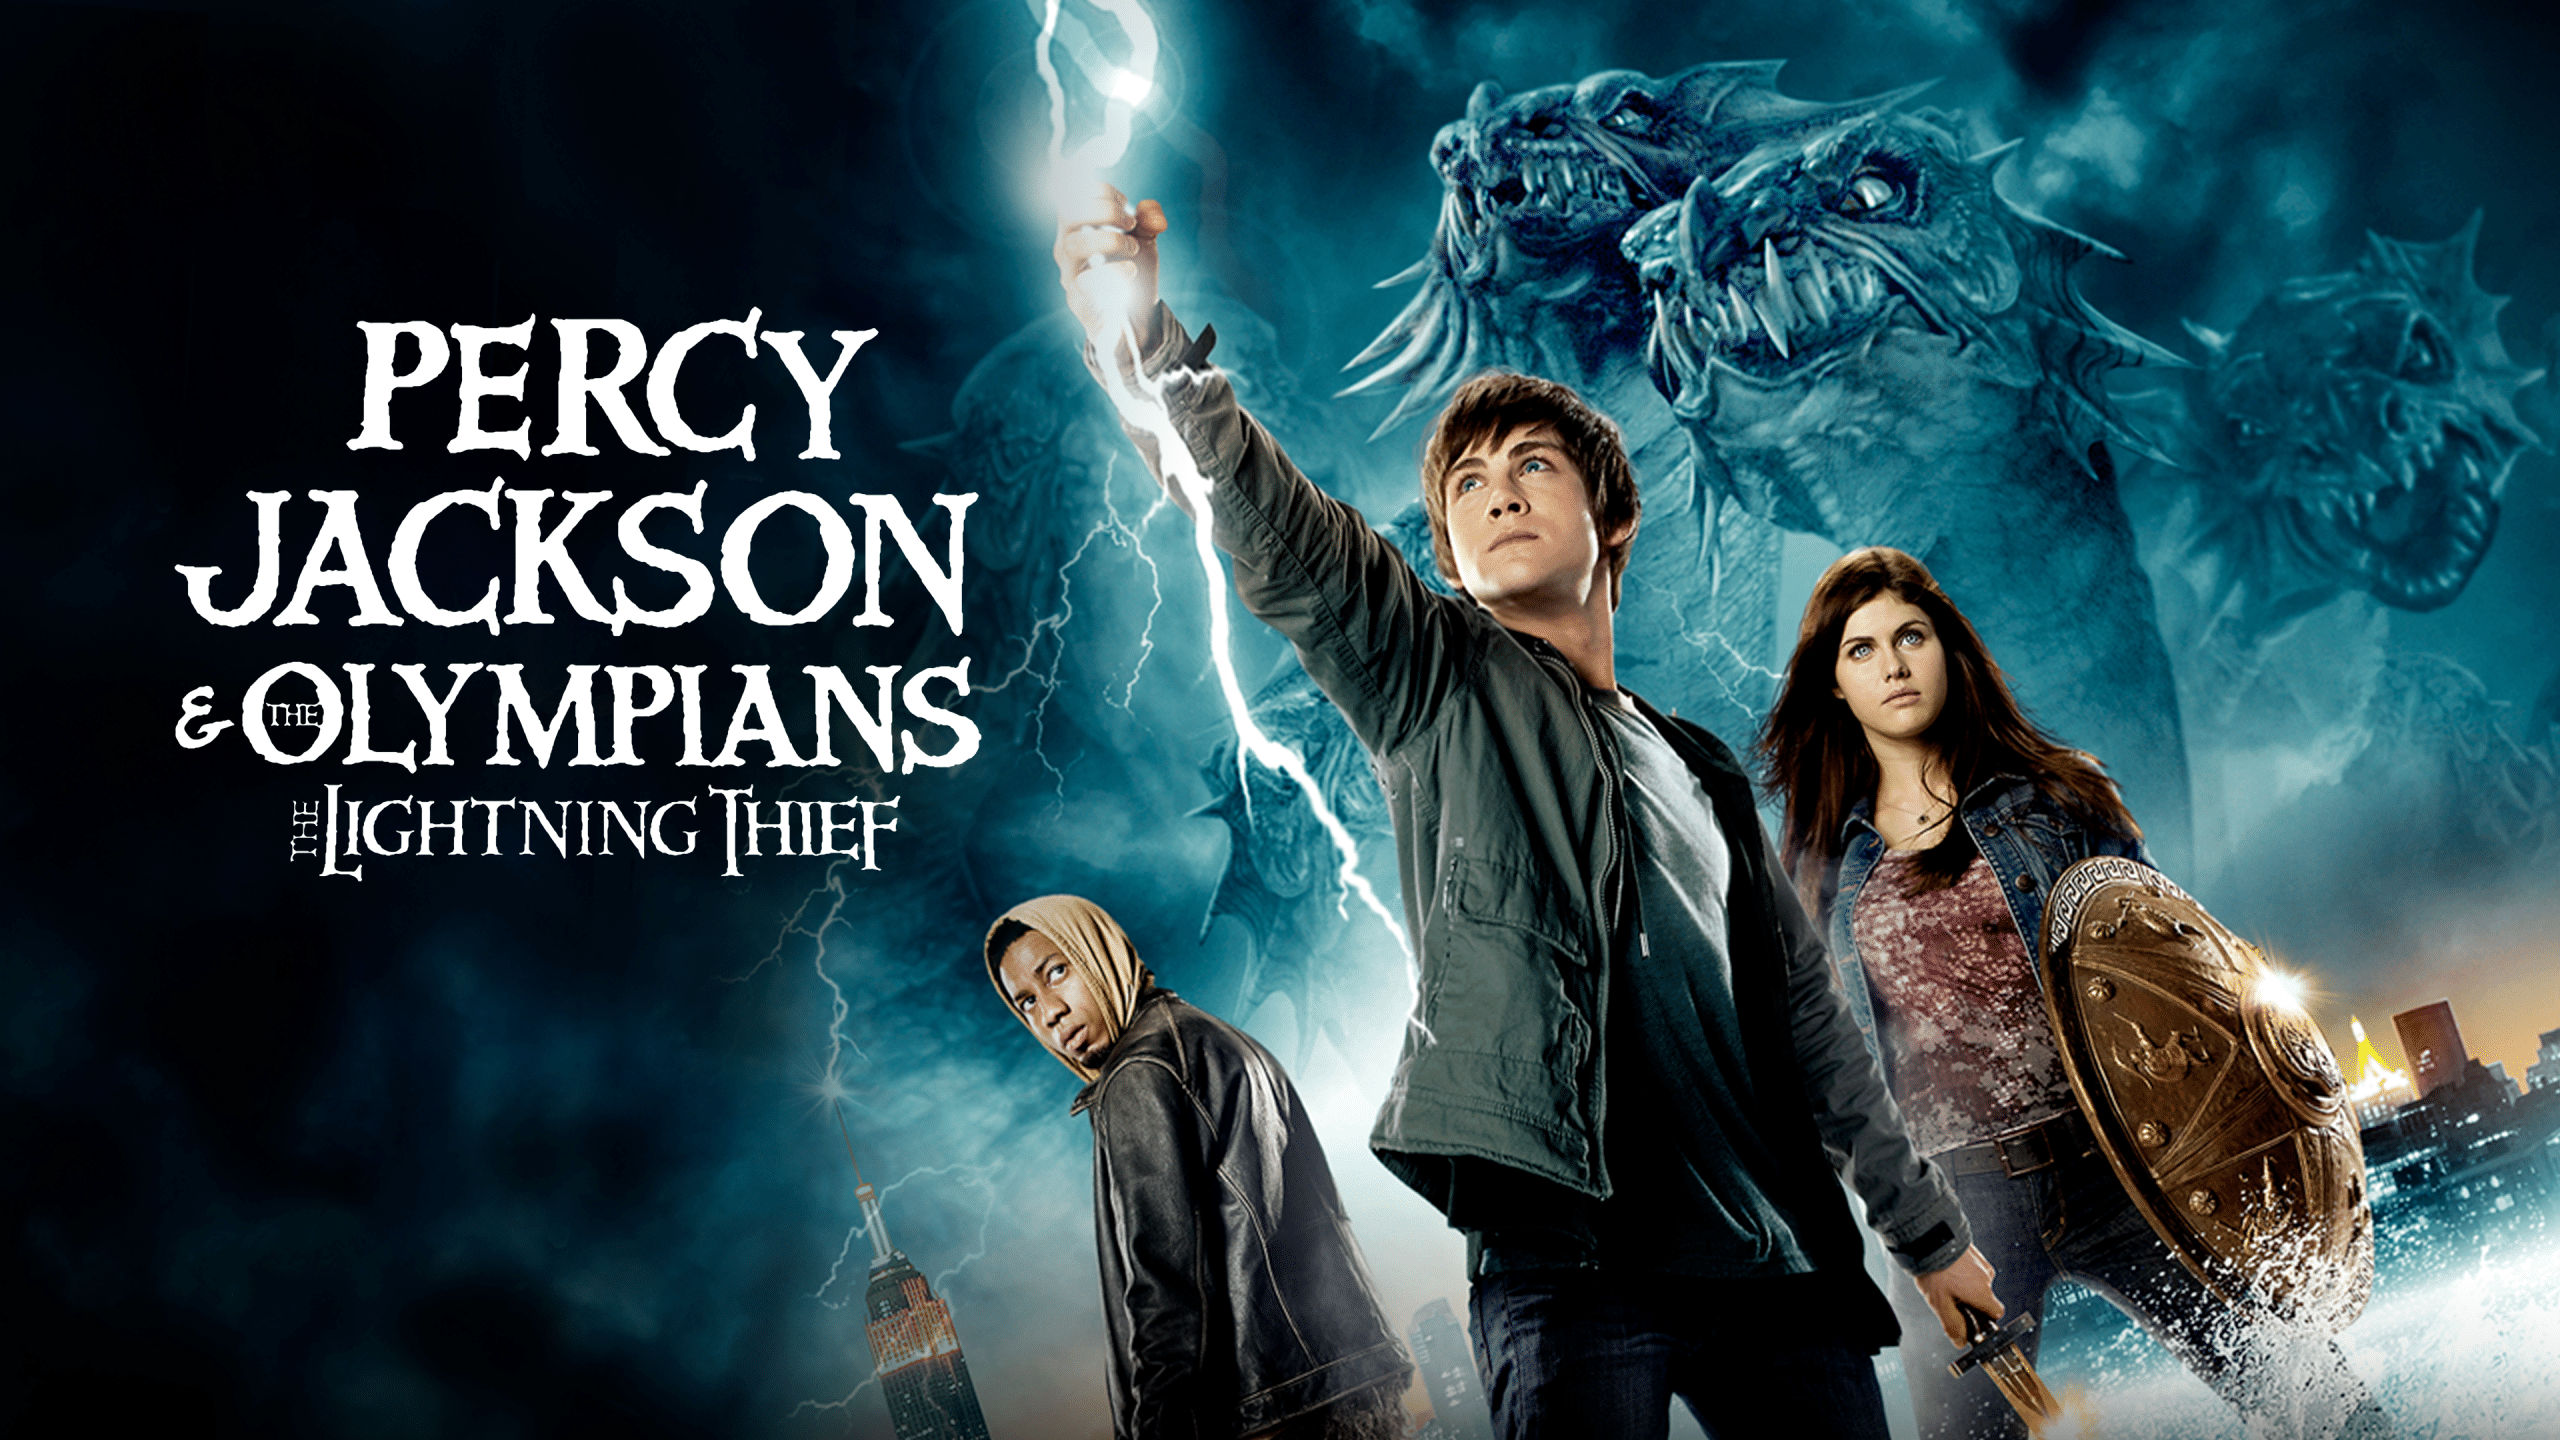 Percy jackson and the lightning thief movie summary passlshot